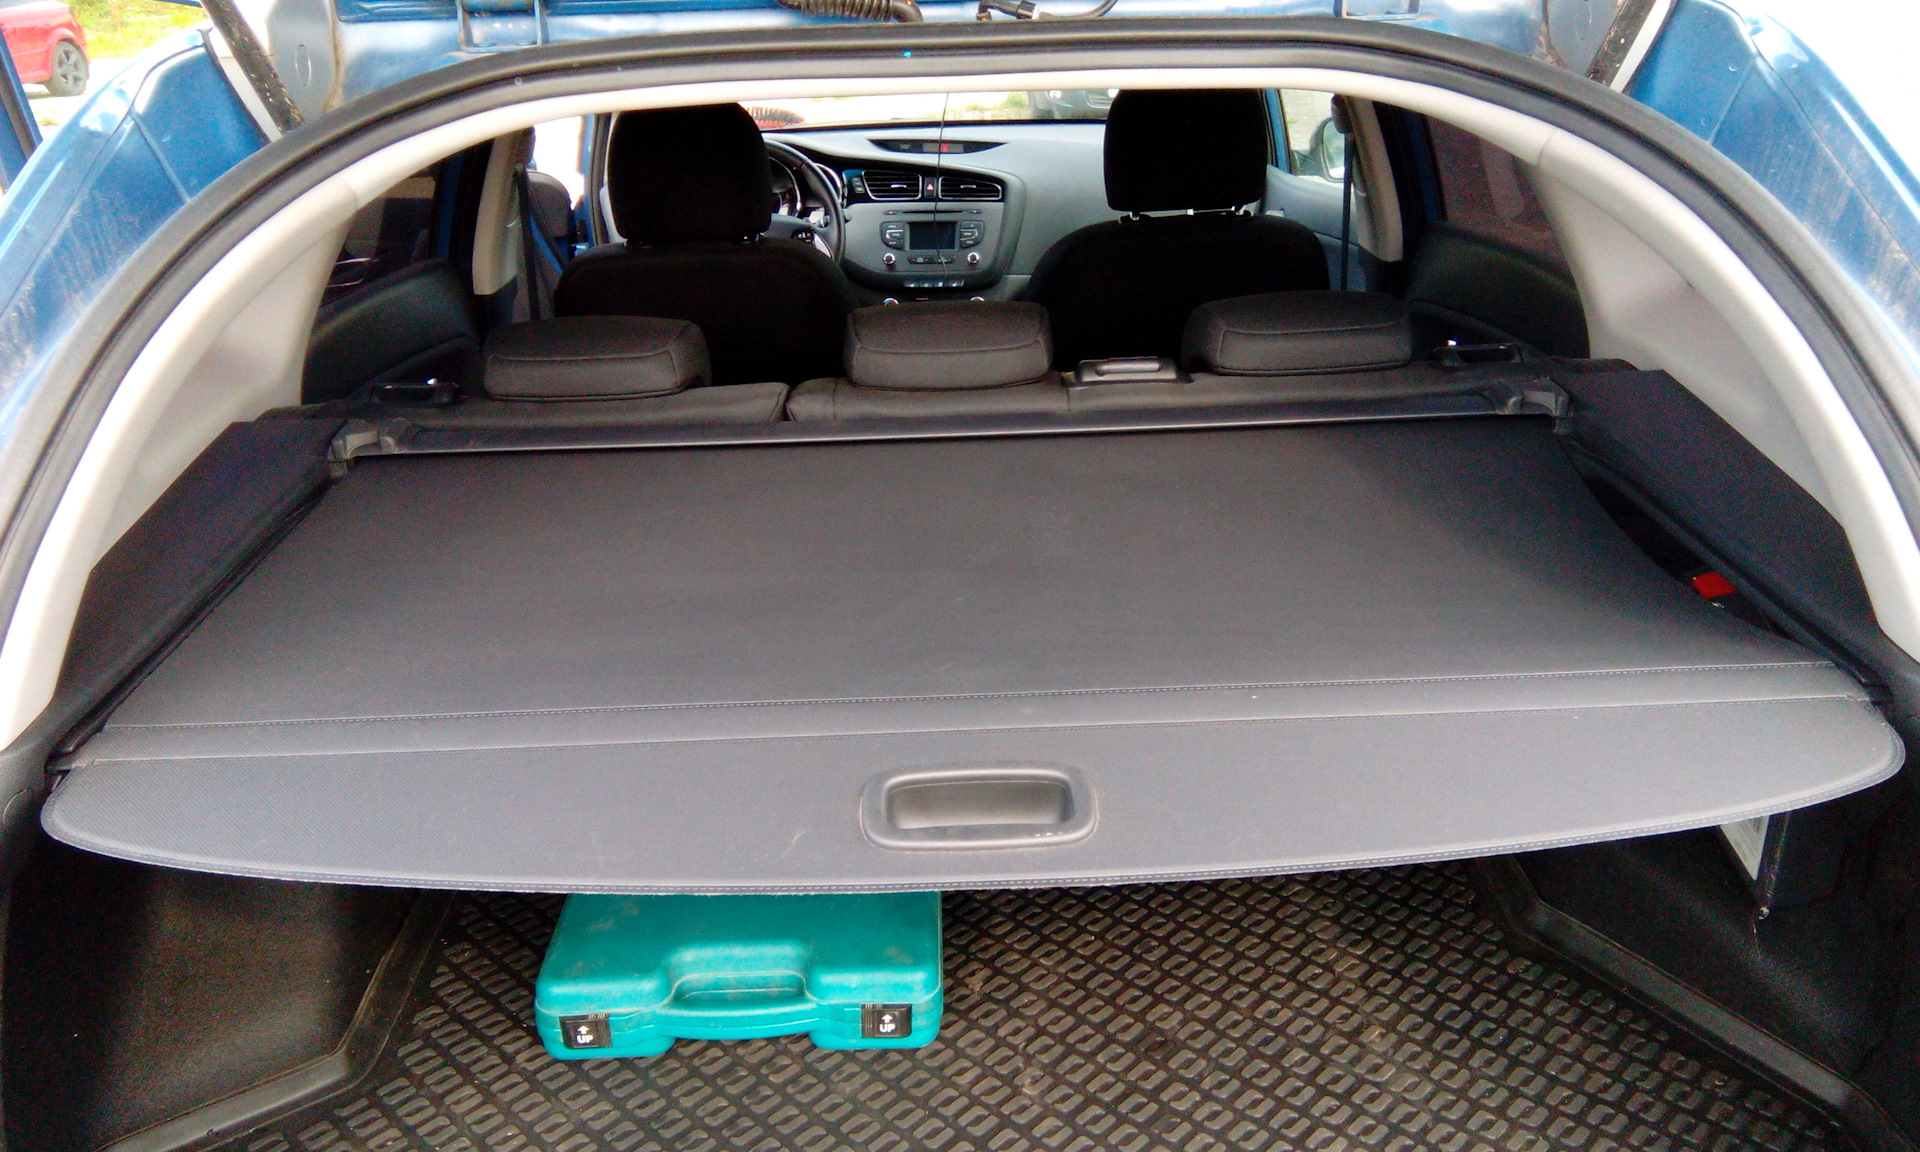 Размеры шторки багажника. Шторка в багажник Хавал ф7. Шторка багажника Kia Ceed SW 2020. Шторка багажника Киа СИД универсал 2021. Полка багажника Kia Ceed универсал.